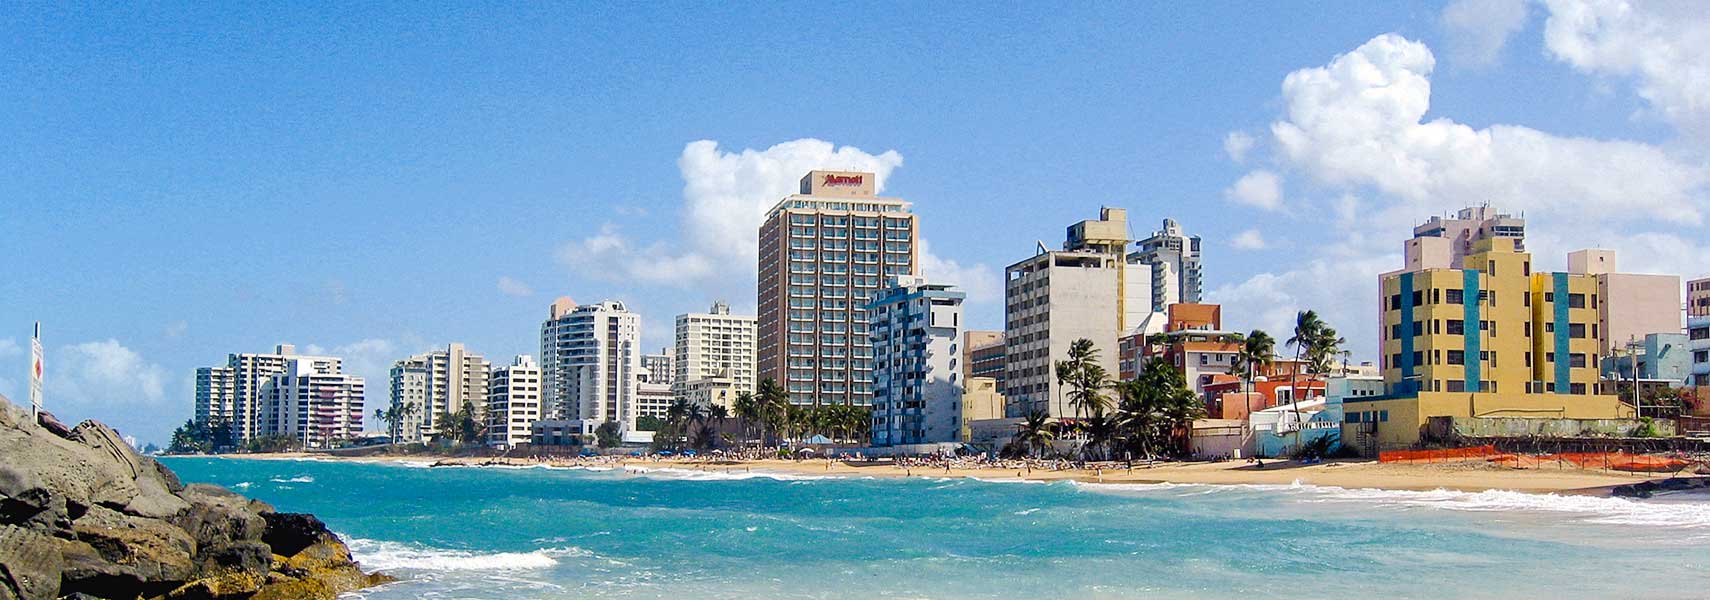 Condado beach, Santurce, San Juan, Puerto Rico